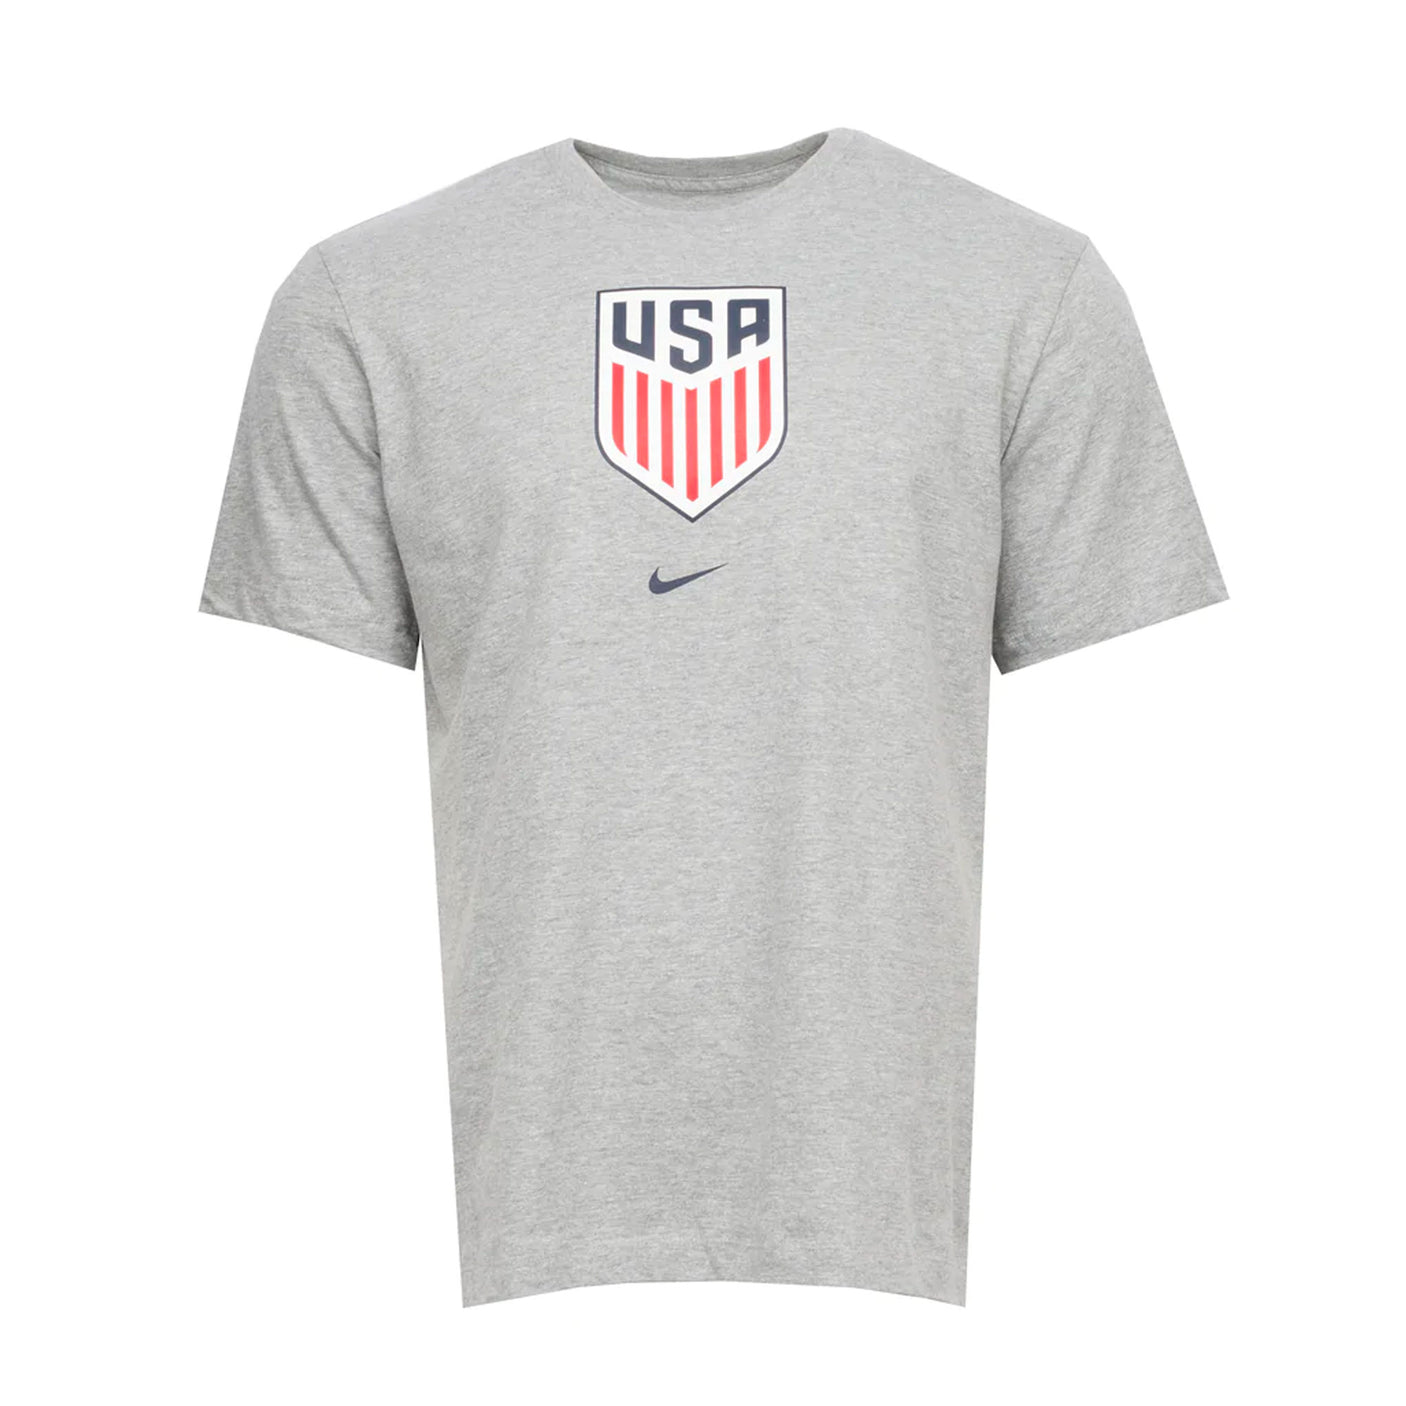 Nike Men's USA Crest T-Shirt Grey Heather Front